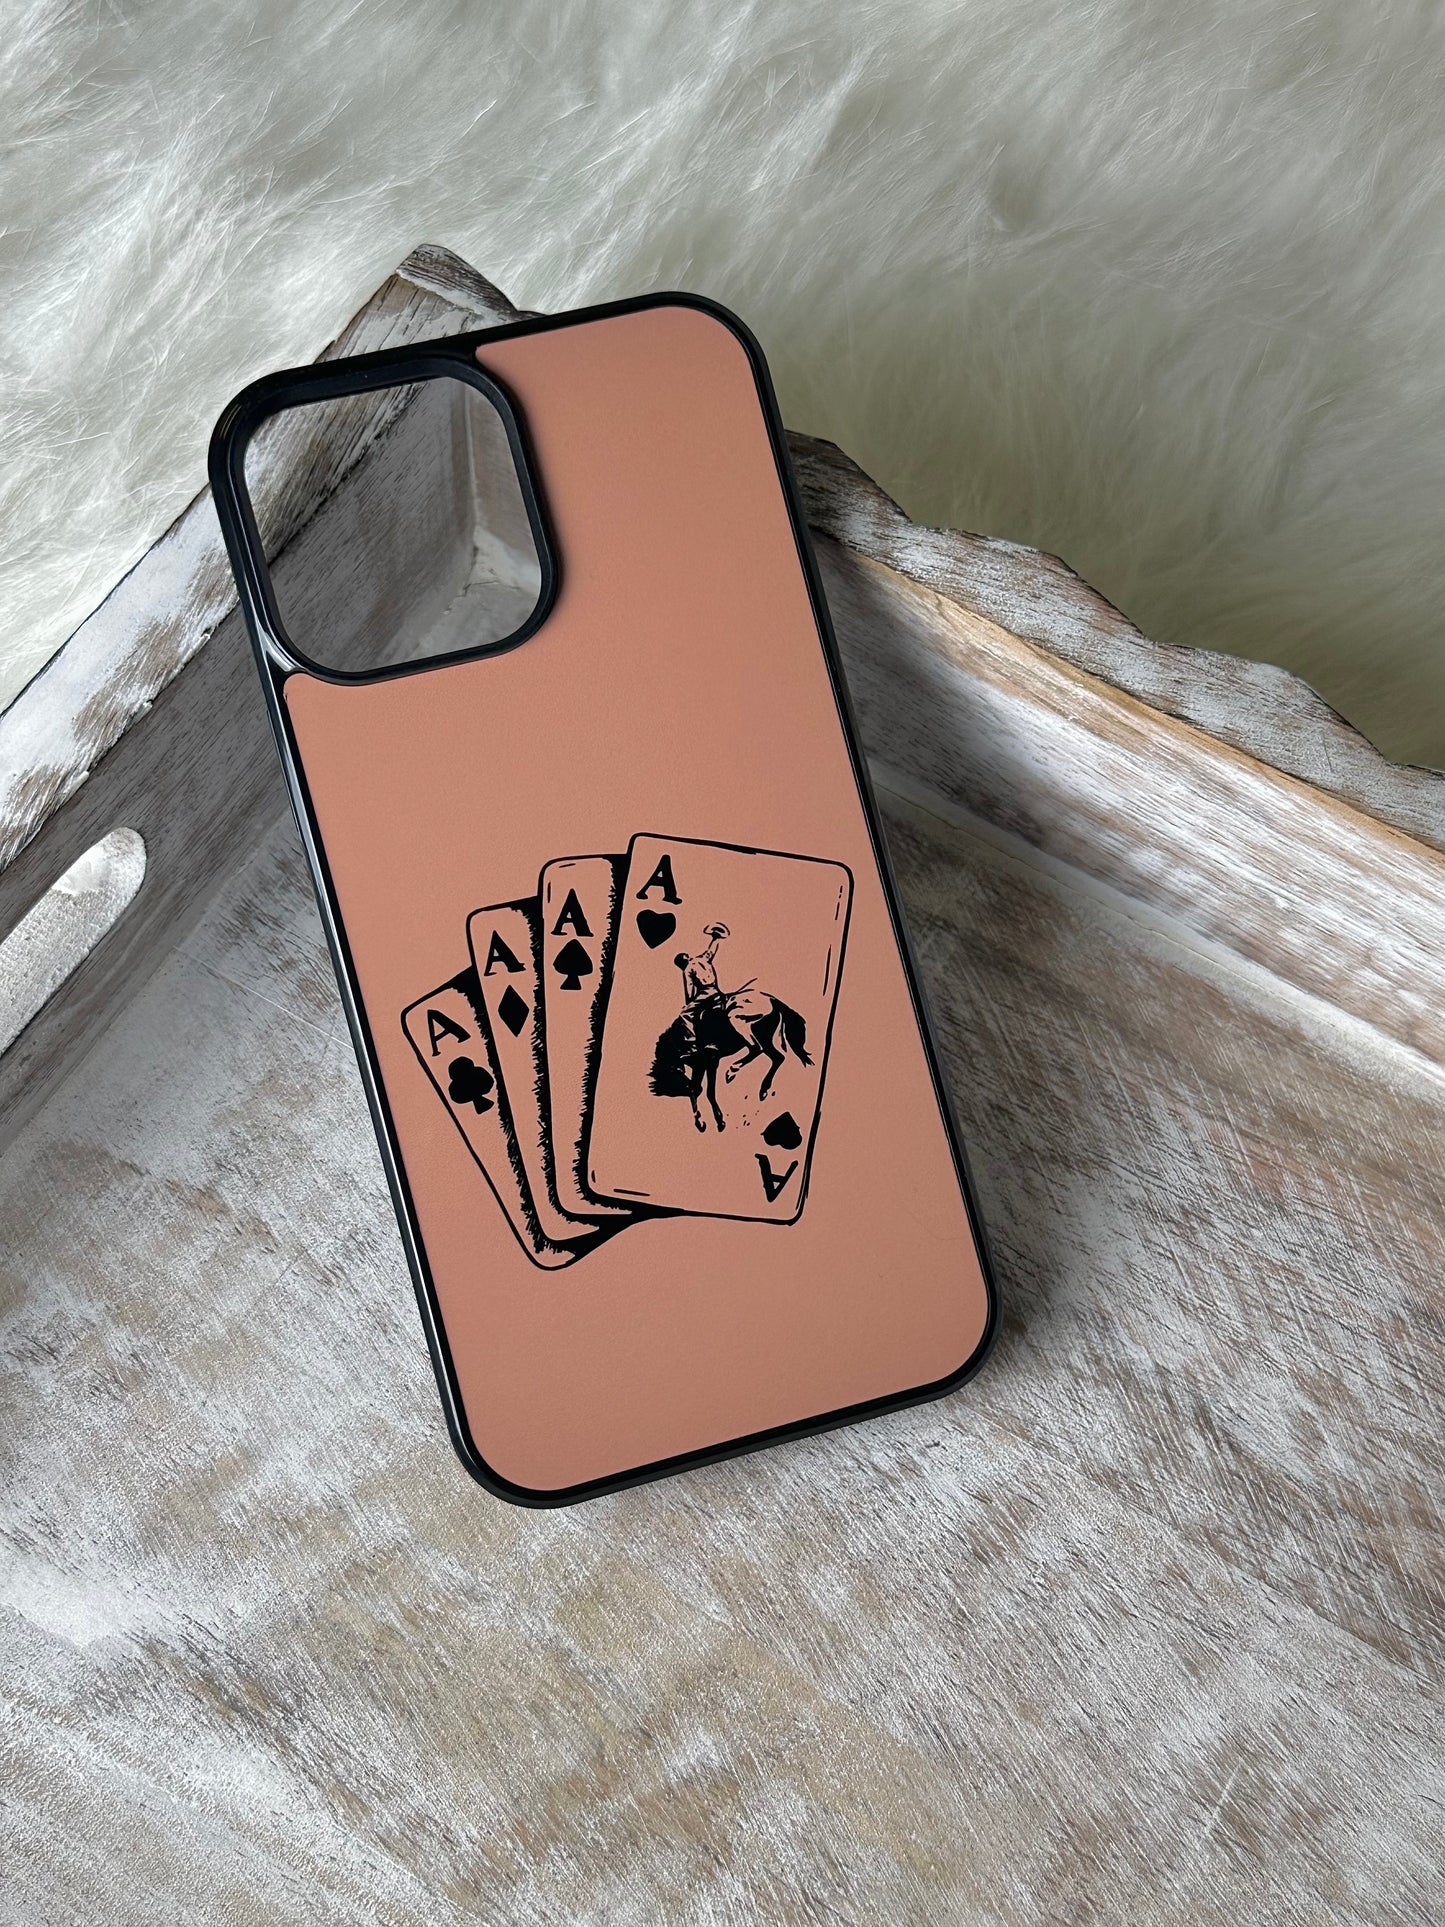 Peachy ace phone case